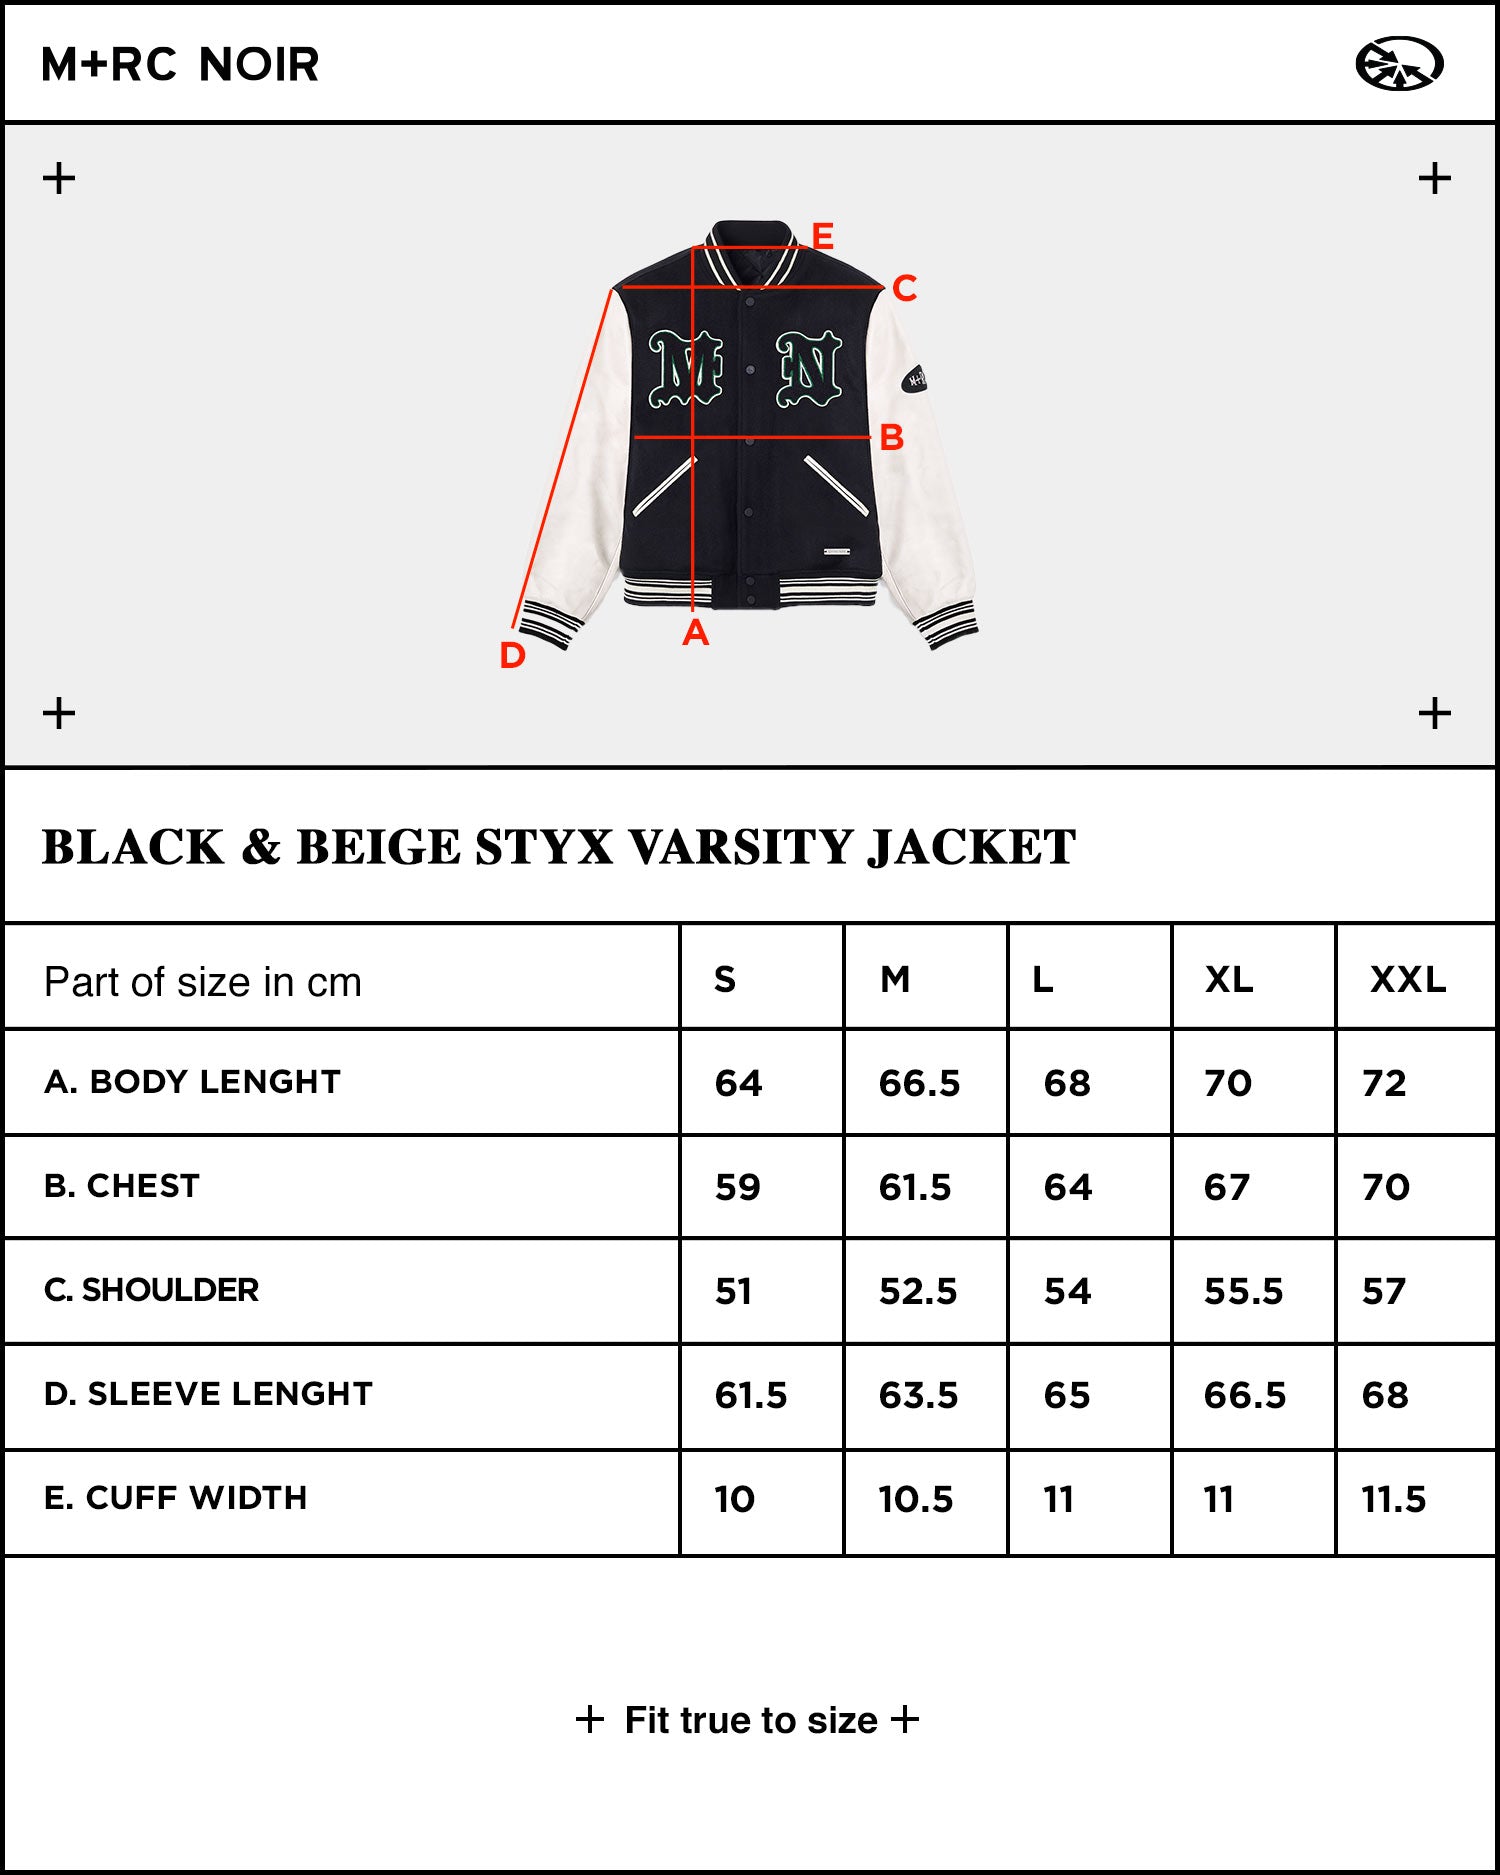 "Styx" Beige and Black Varsity Jacket - mrcnoir